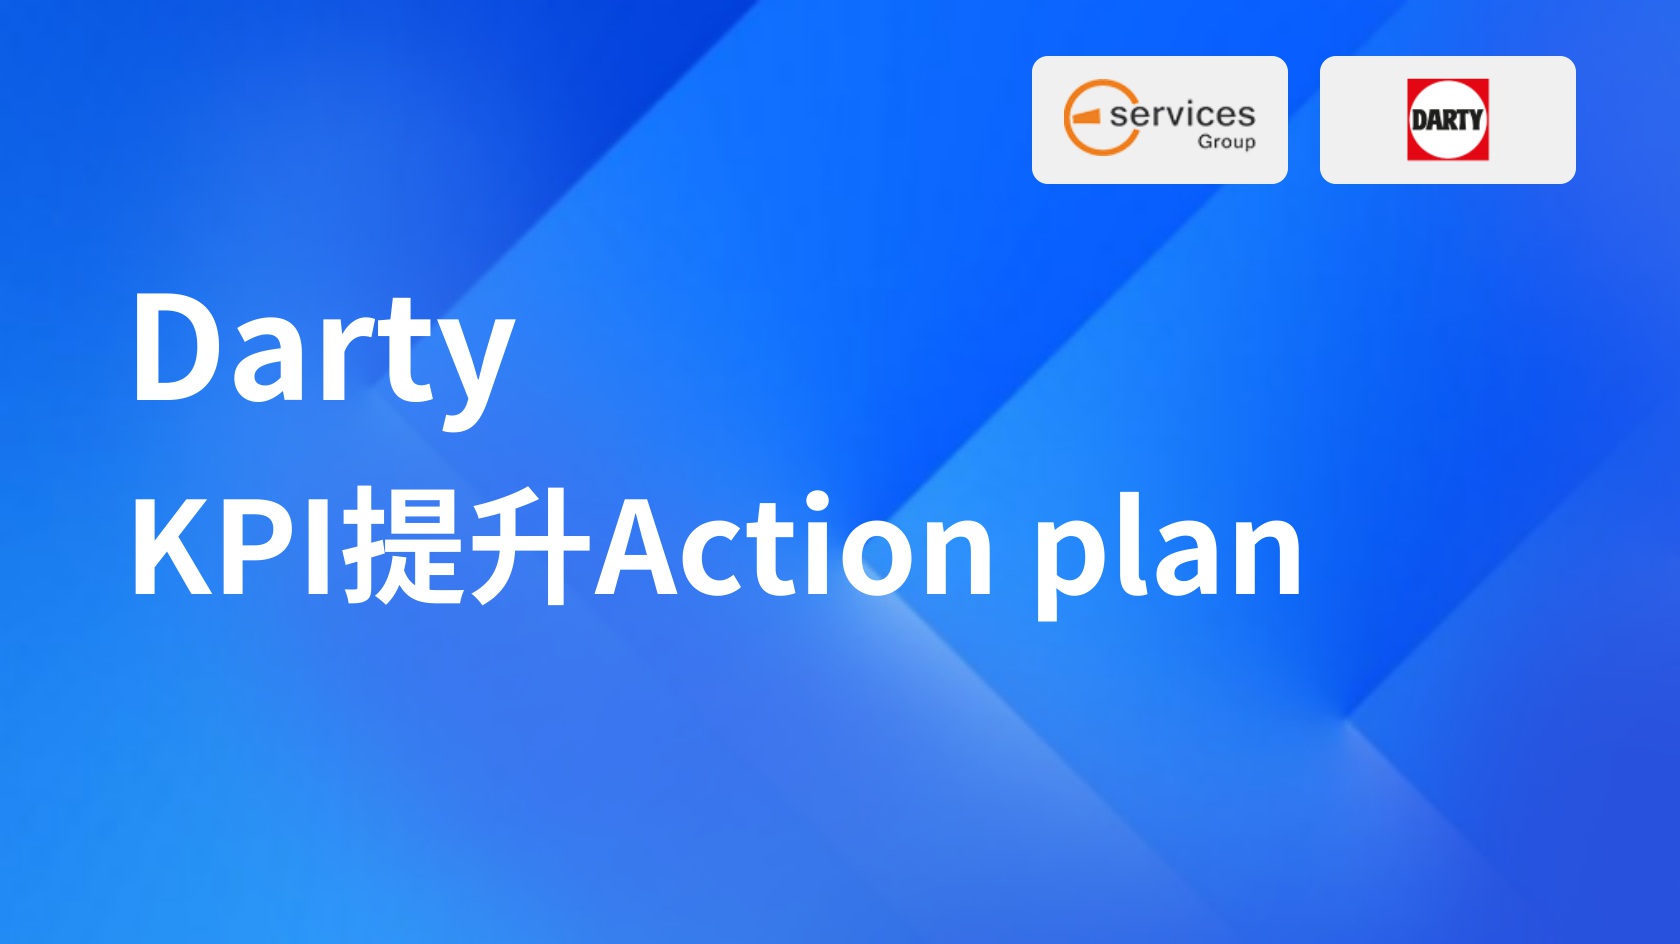 KPI提升Action plan